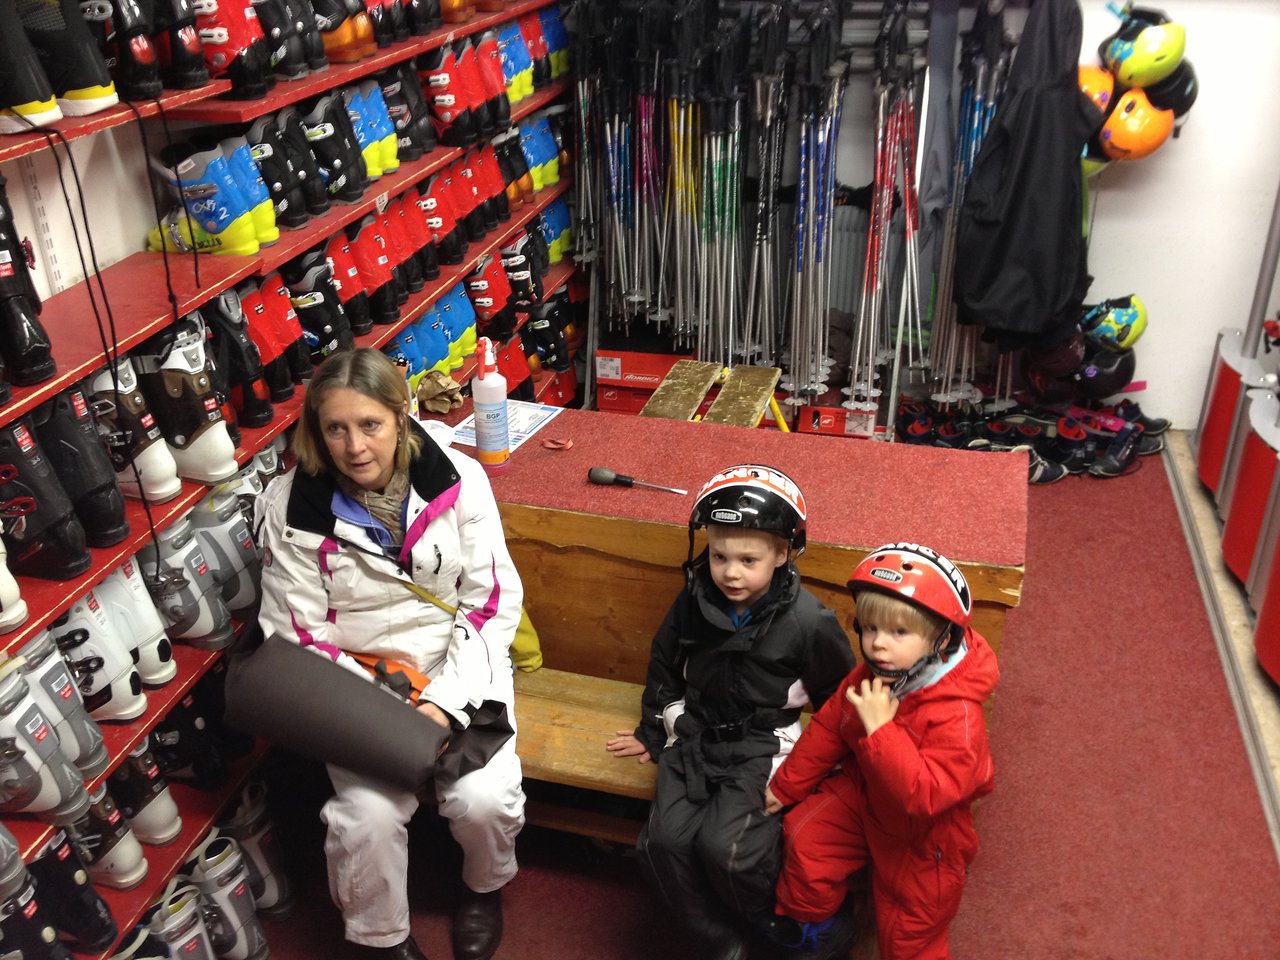 Renting skis